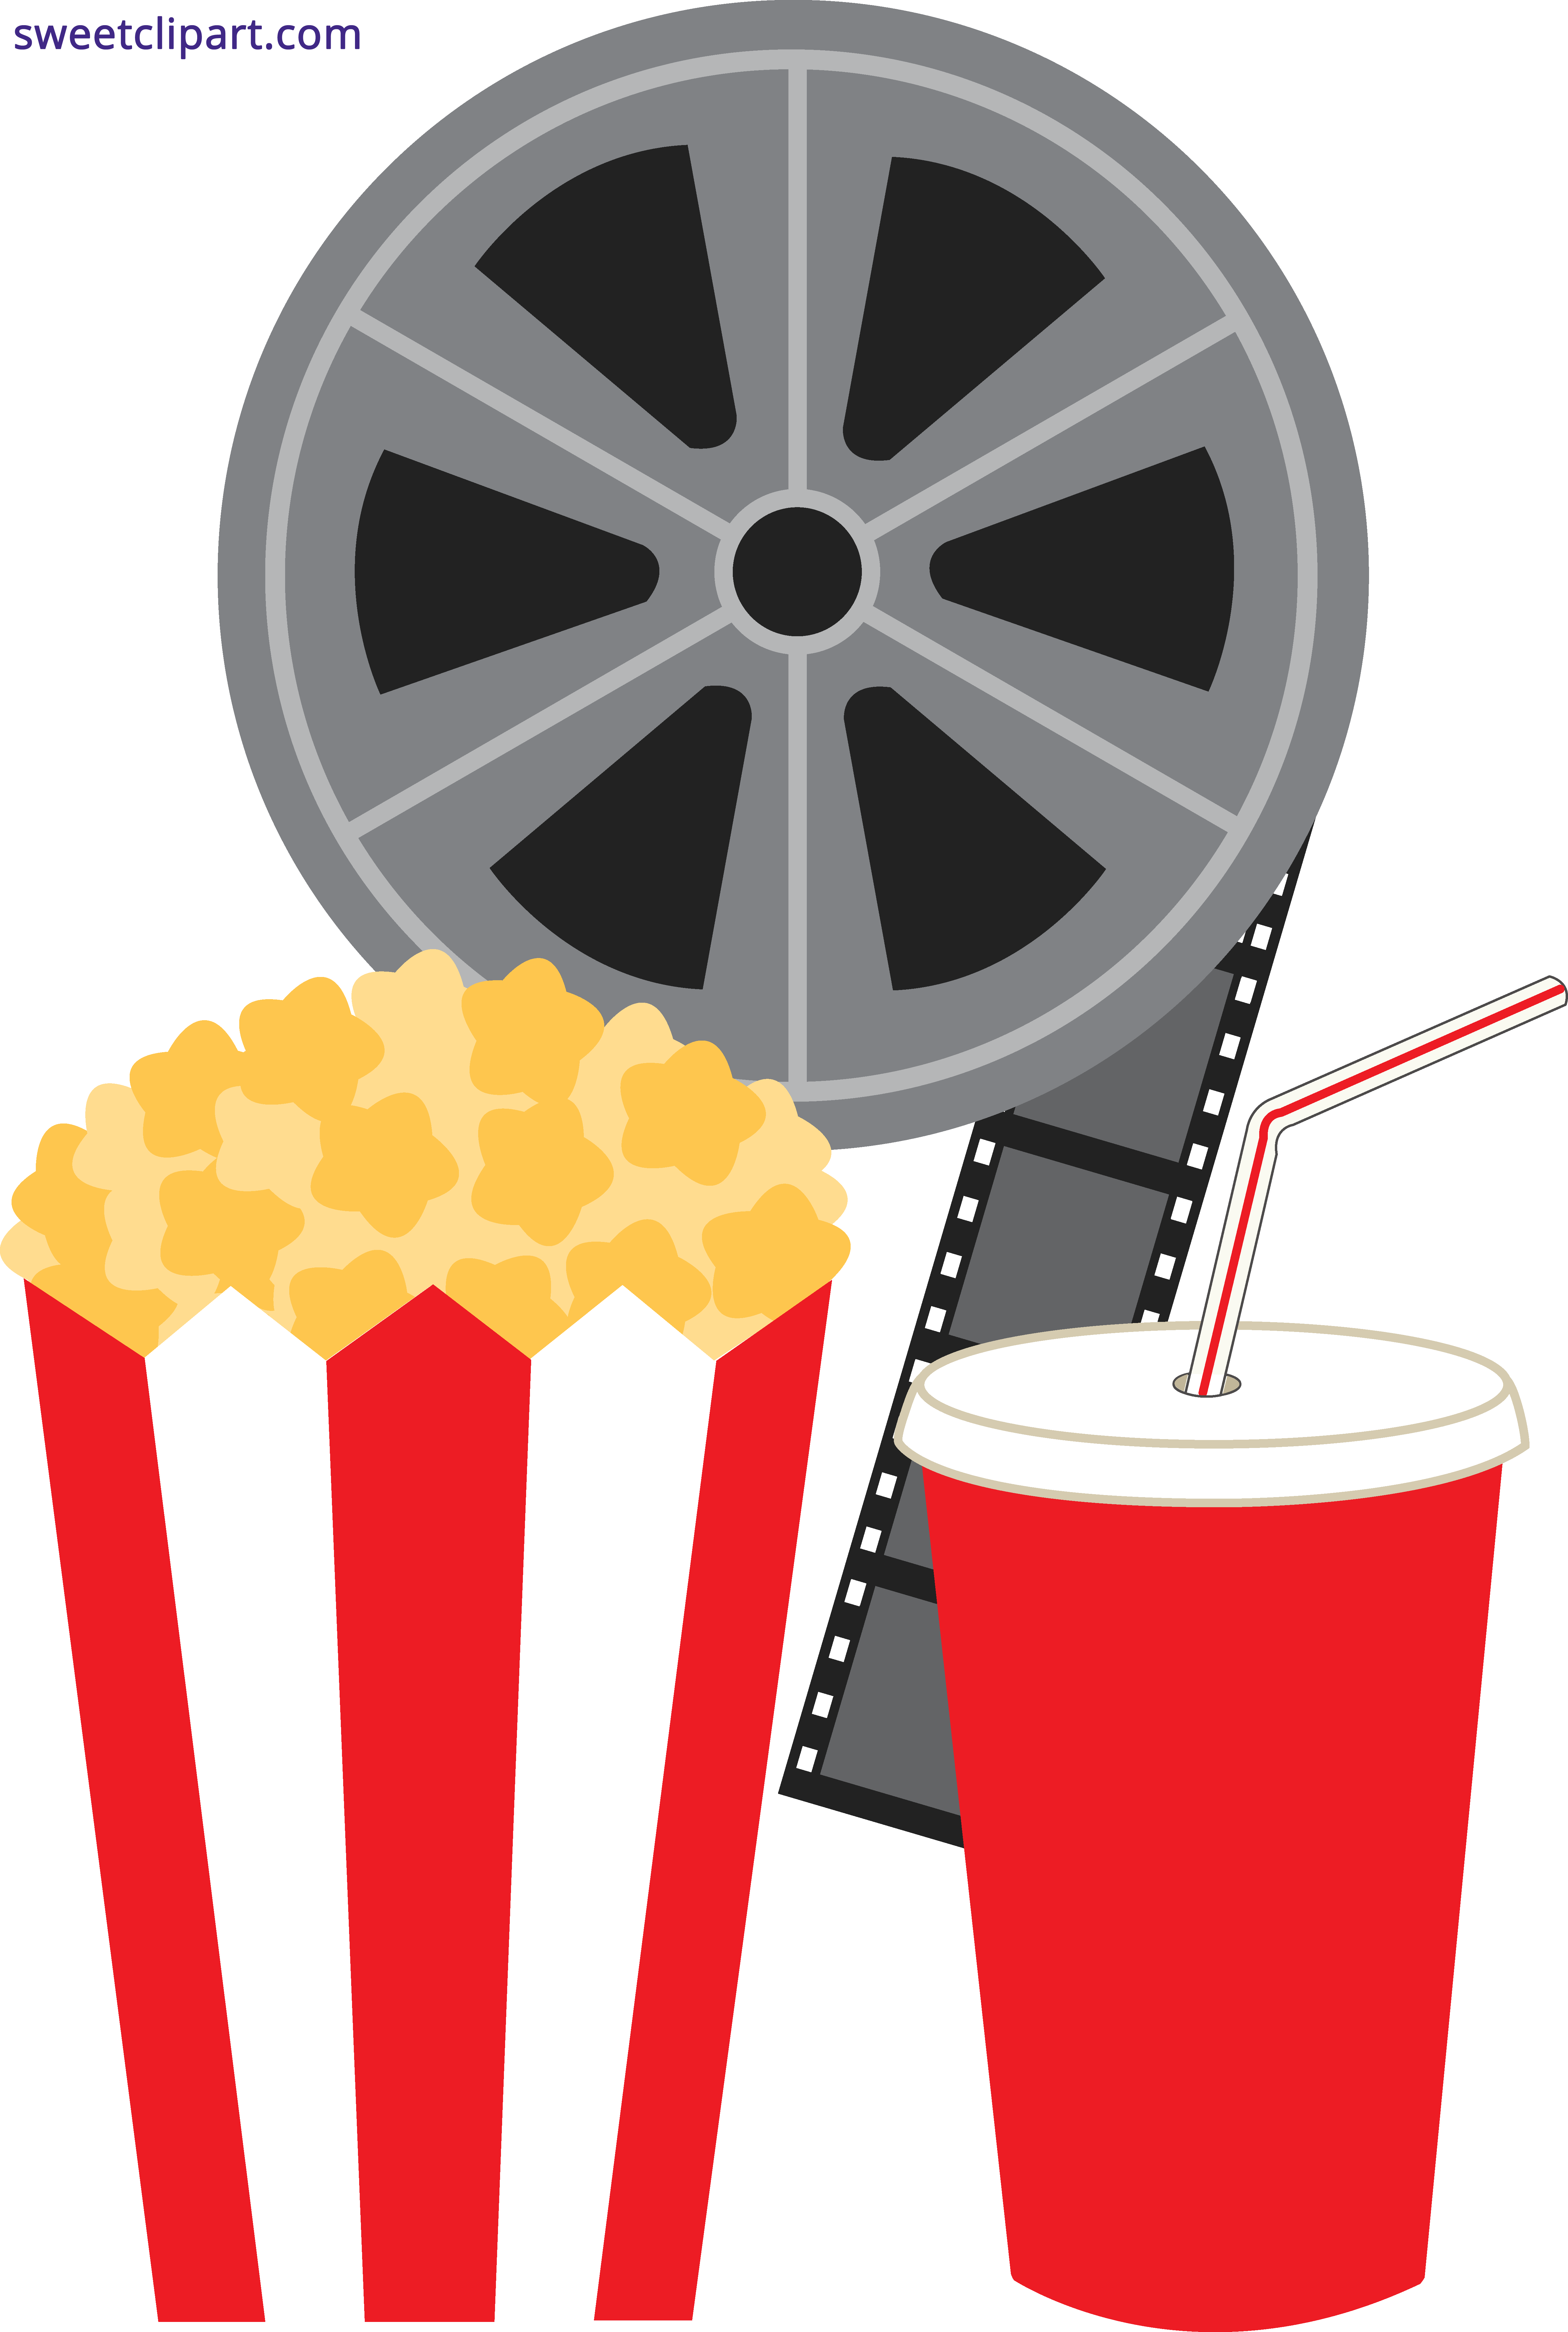 Movie clipart. Popcorn soda and sweet